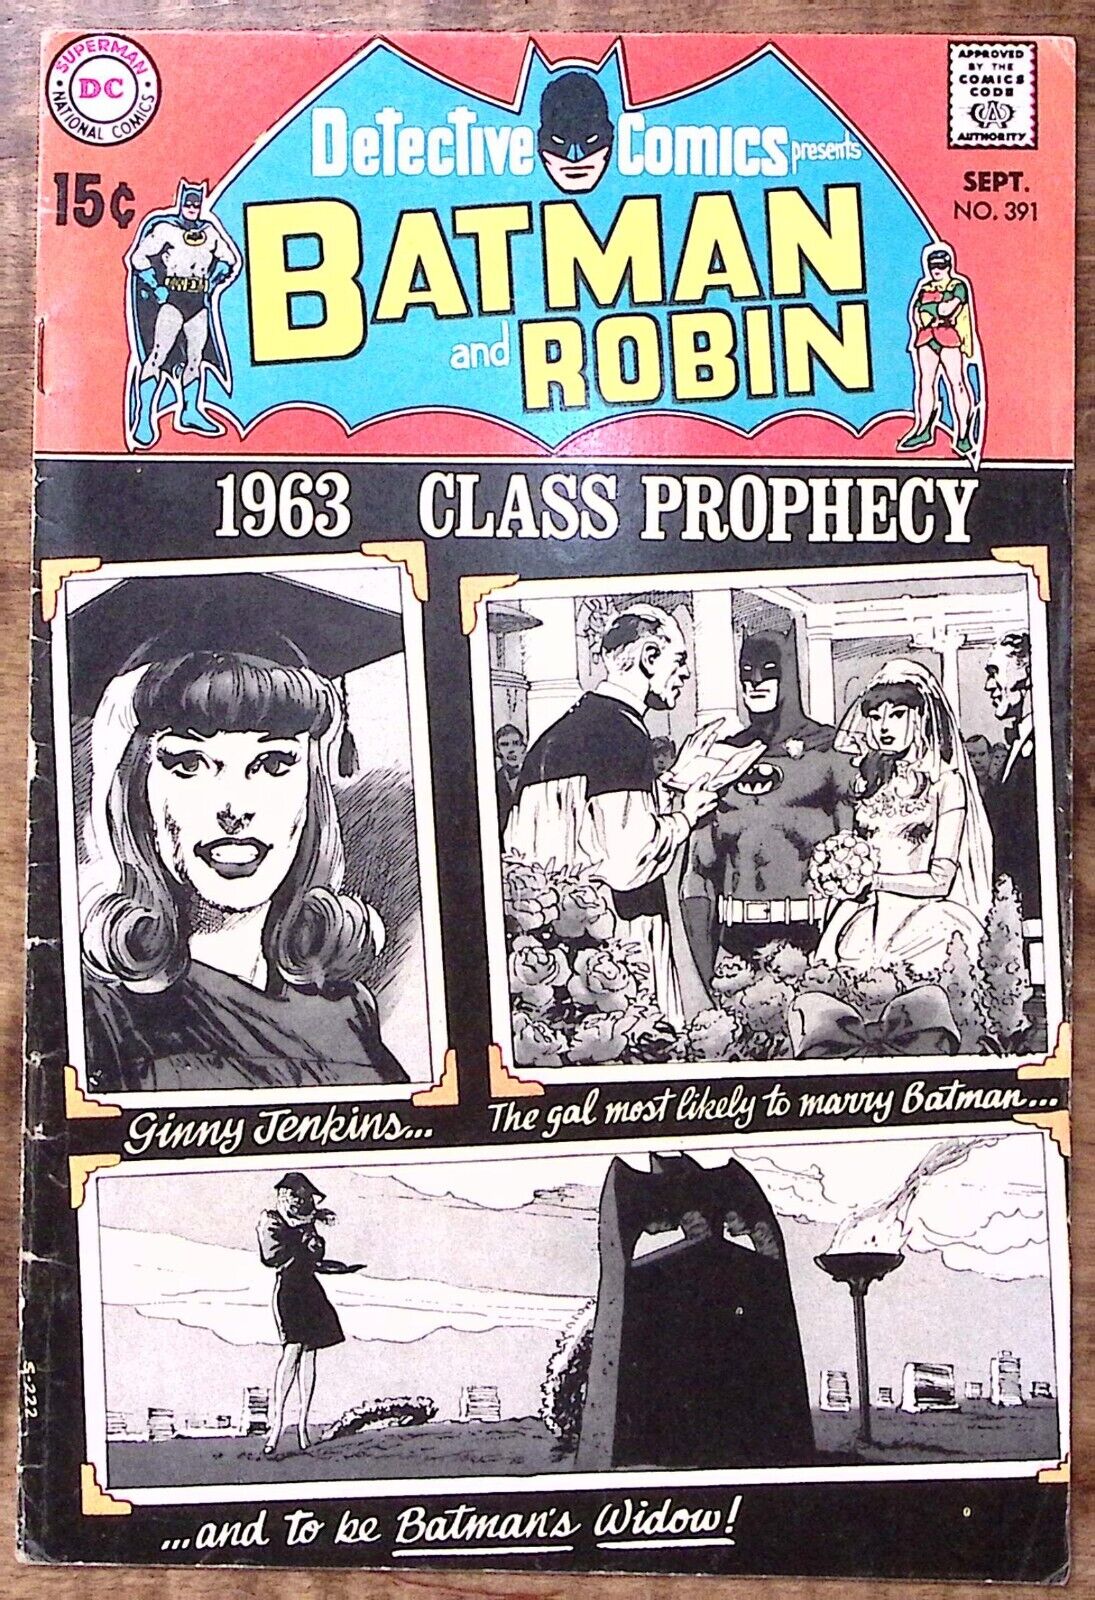 DECTIVE COMICS BATMAN AND ROBIN 1969 SEPT #391 1963 CLASS PROPHECY  Z2805